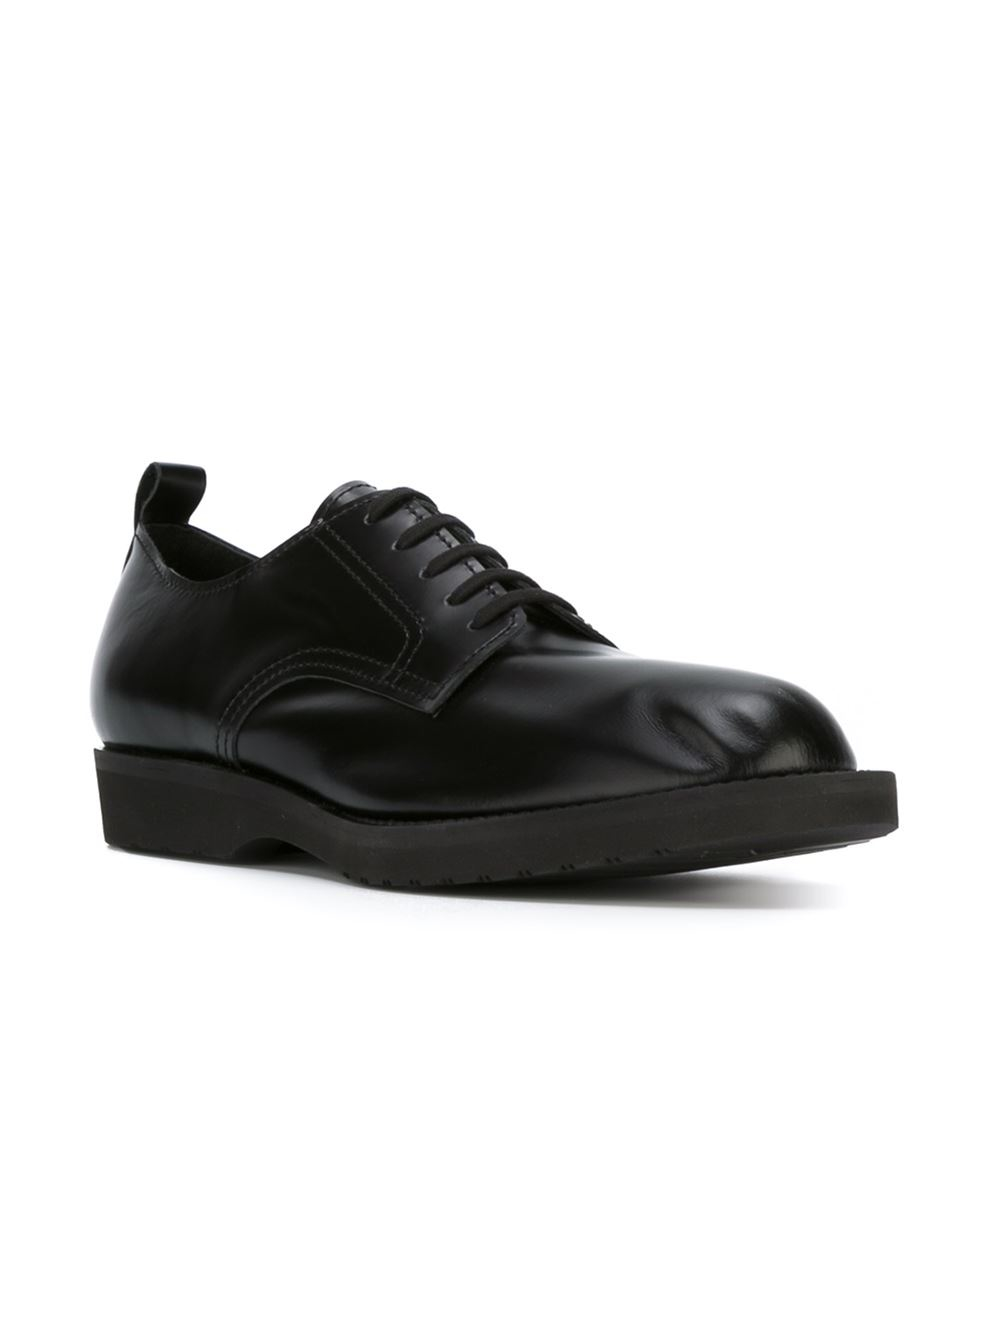 Lyst - Comme Des Garçons Leather Derby Shoes in Black for Men